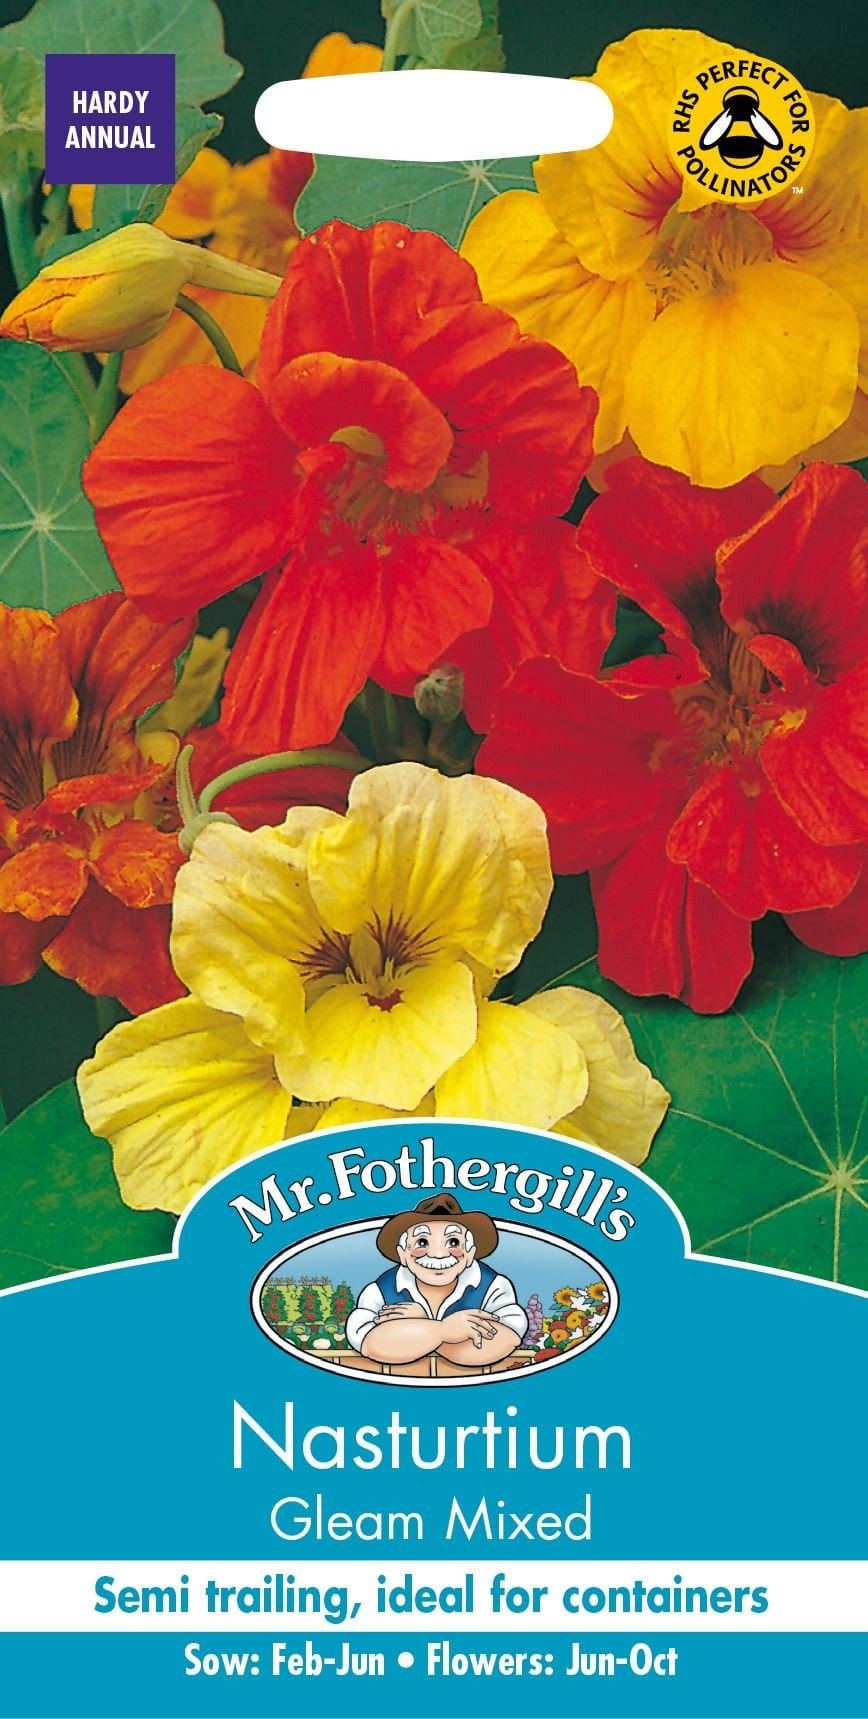 Mr Fothergills Nasturtium Gleam mixed 30 Seeds